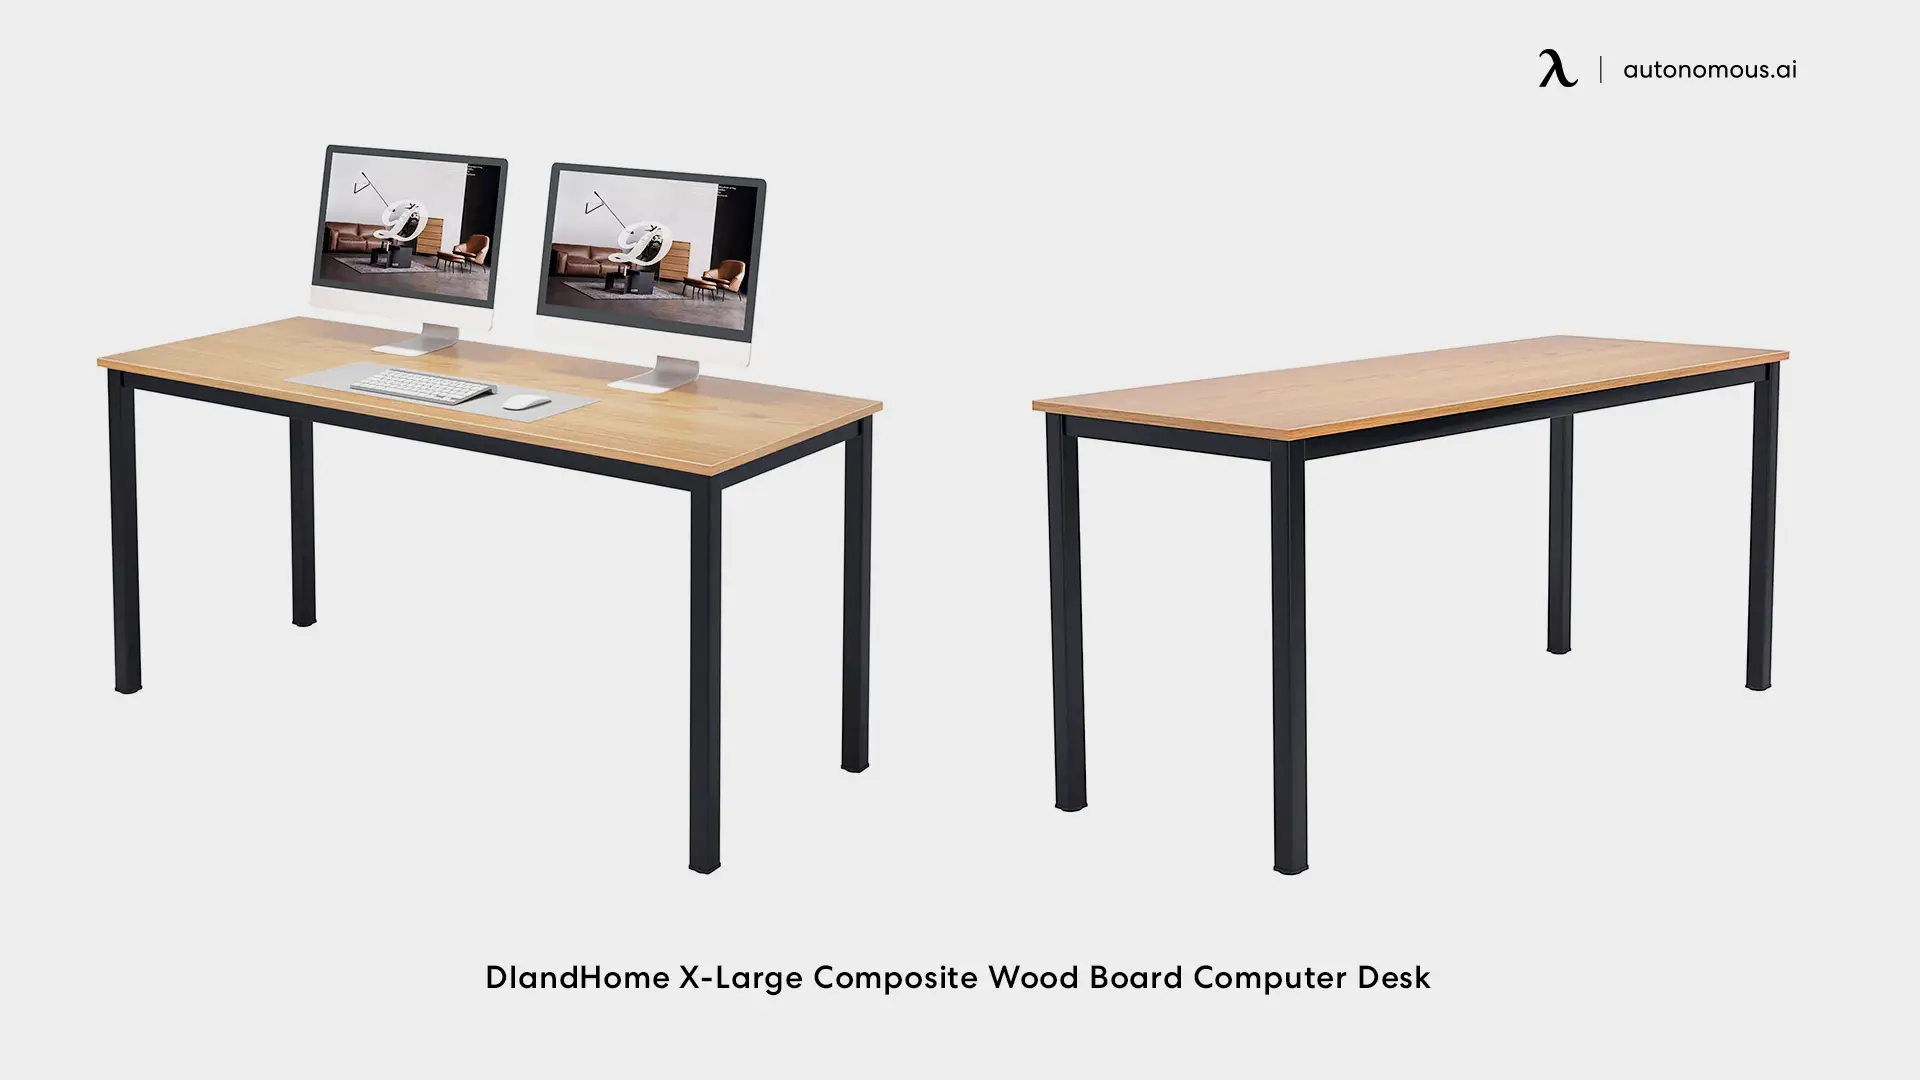 X-Large Composite Wood Board Computer Desk from DlandHome